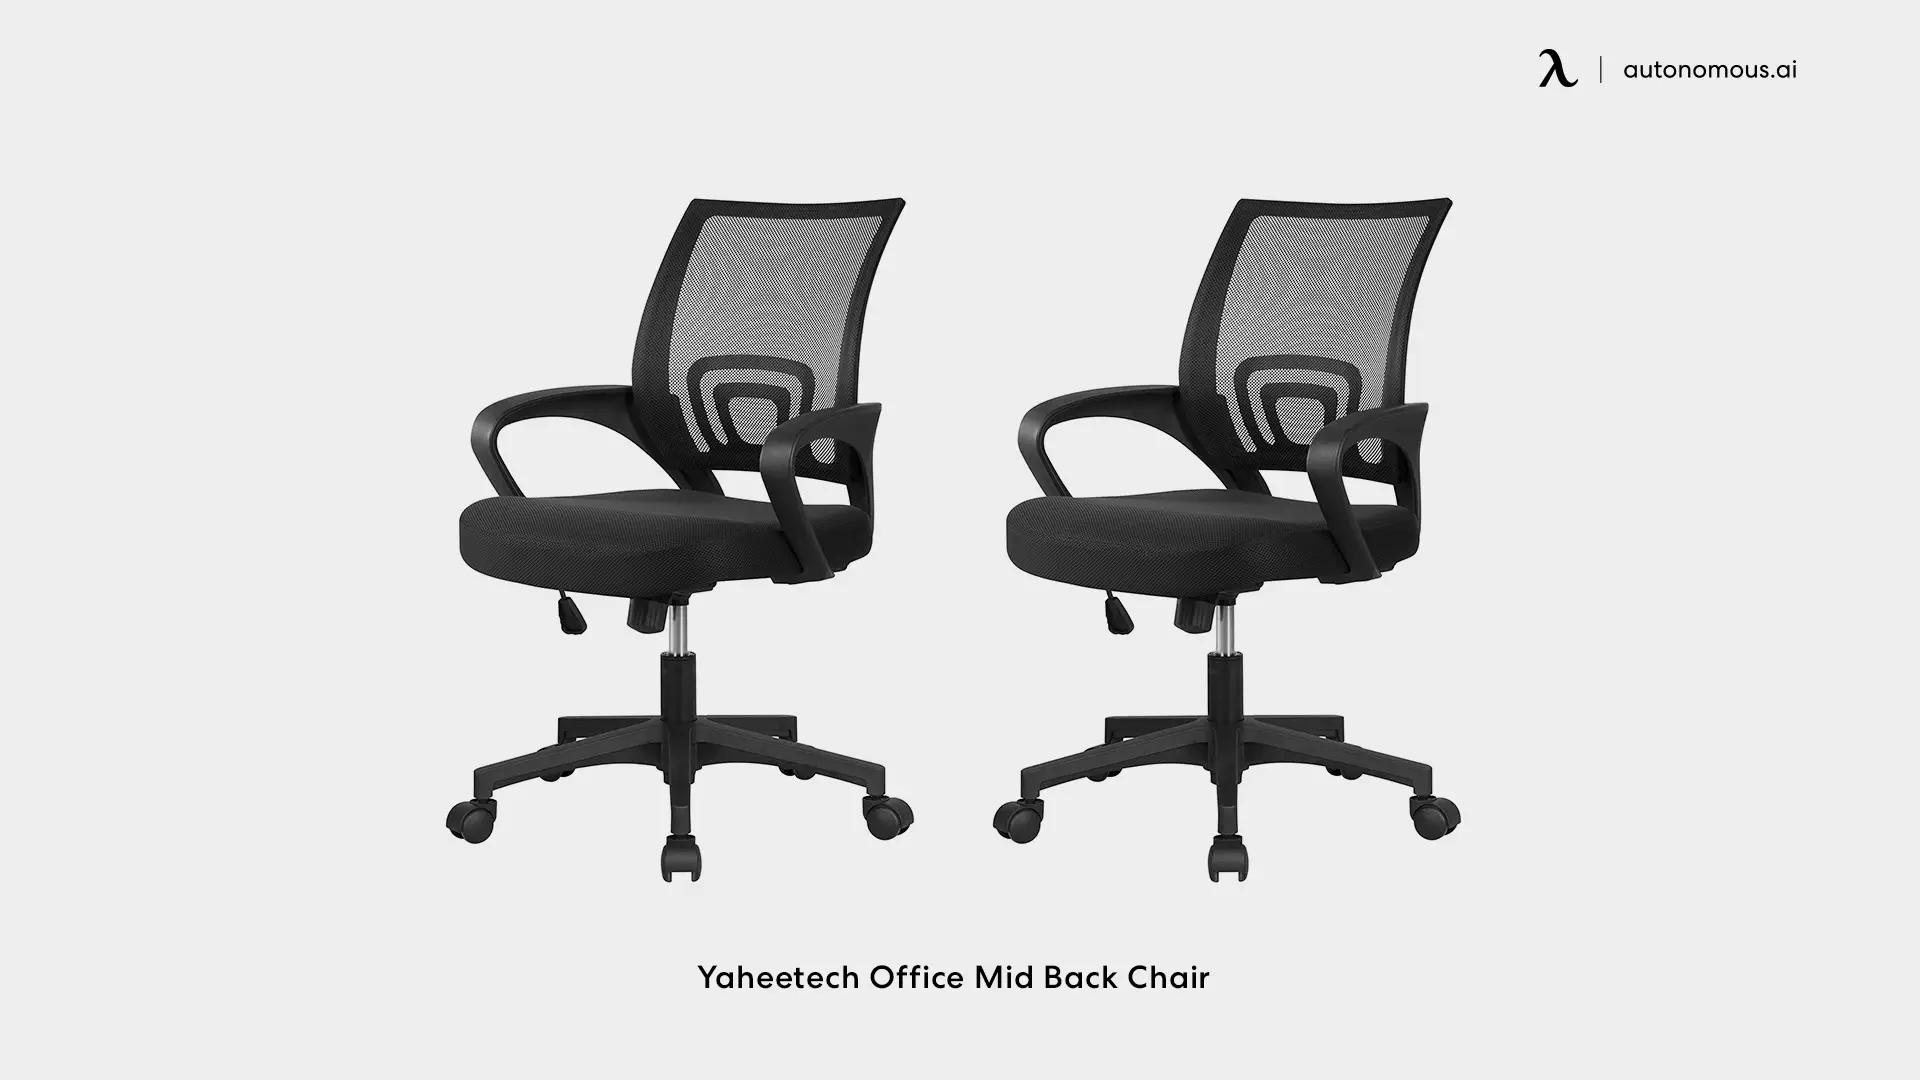 Yaheetech Office Mid Back Chair - minimalist chair